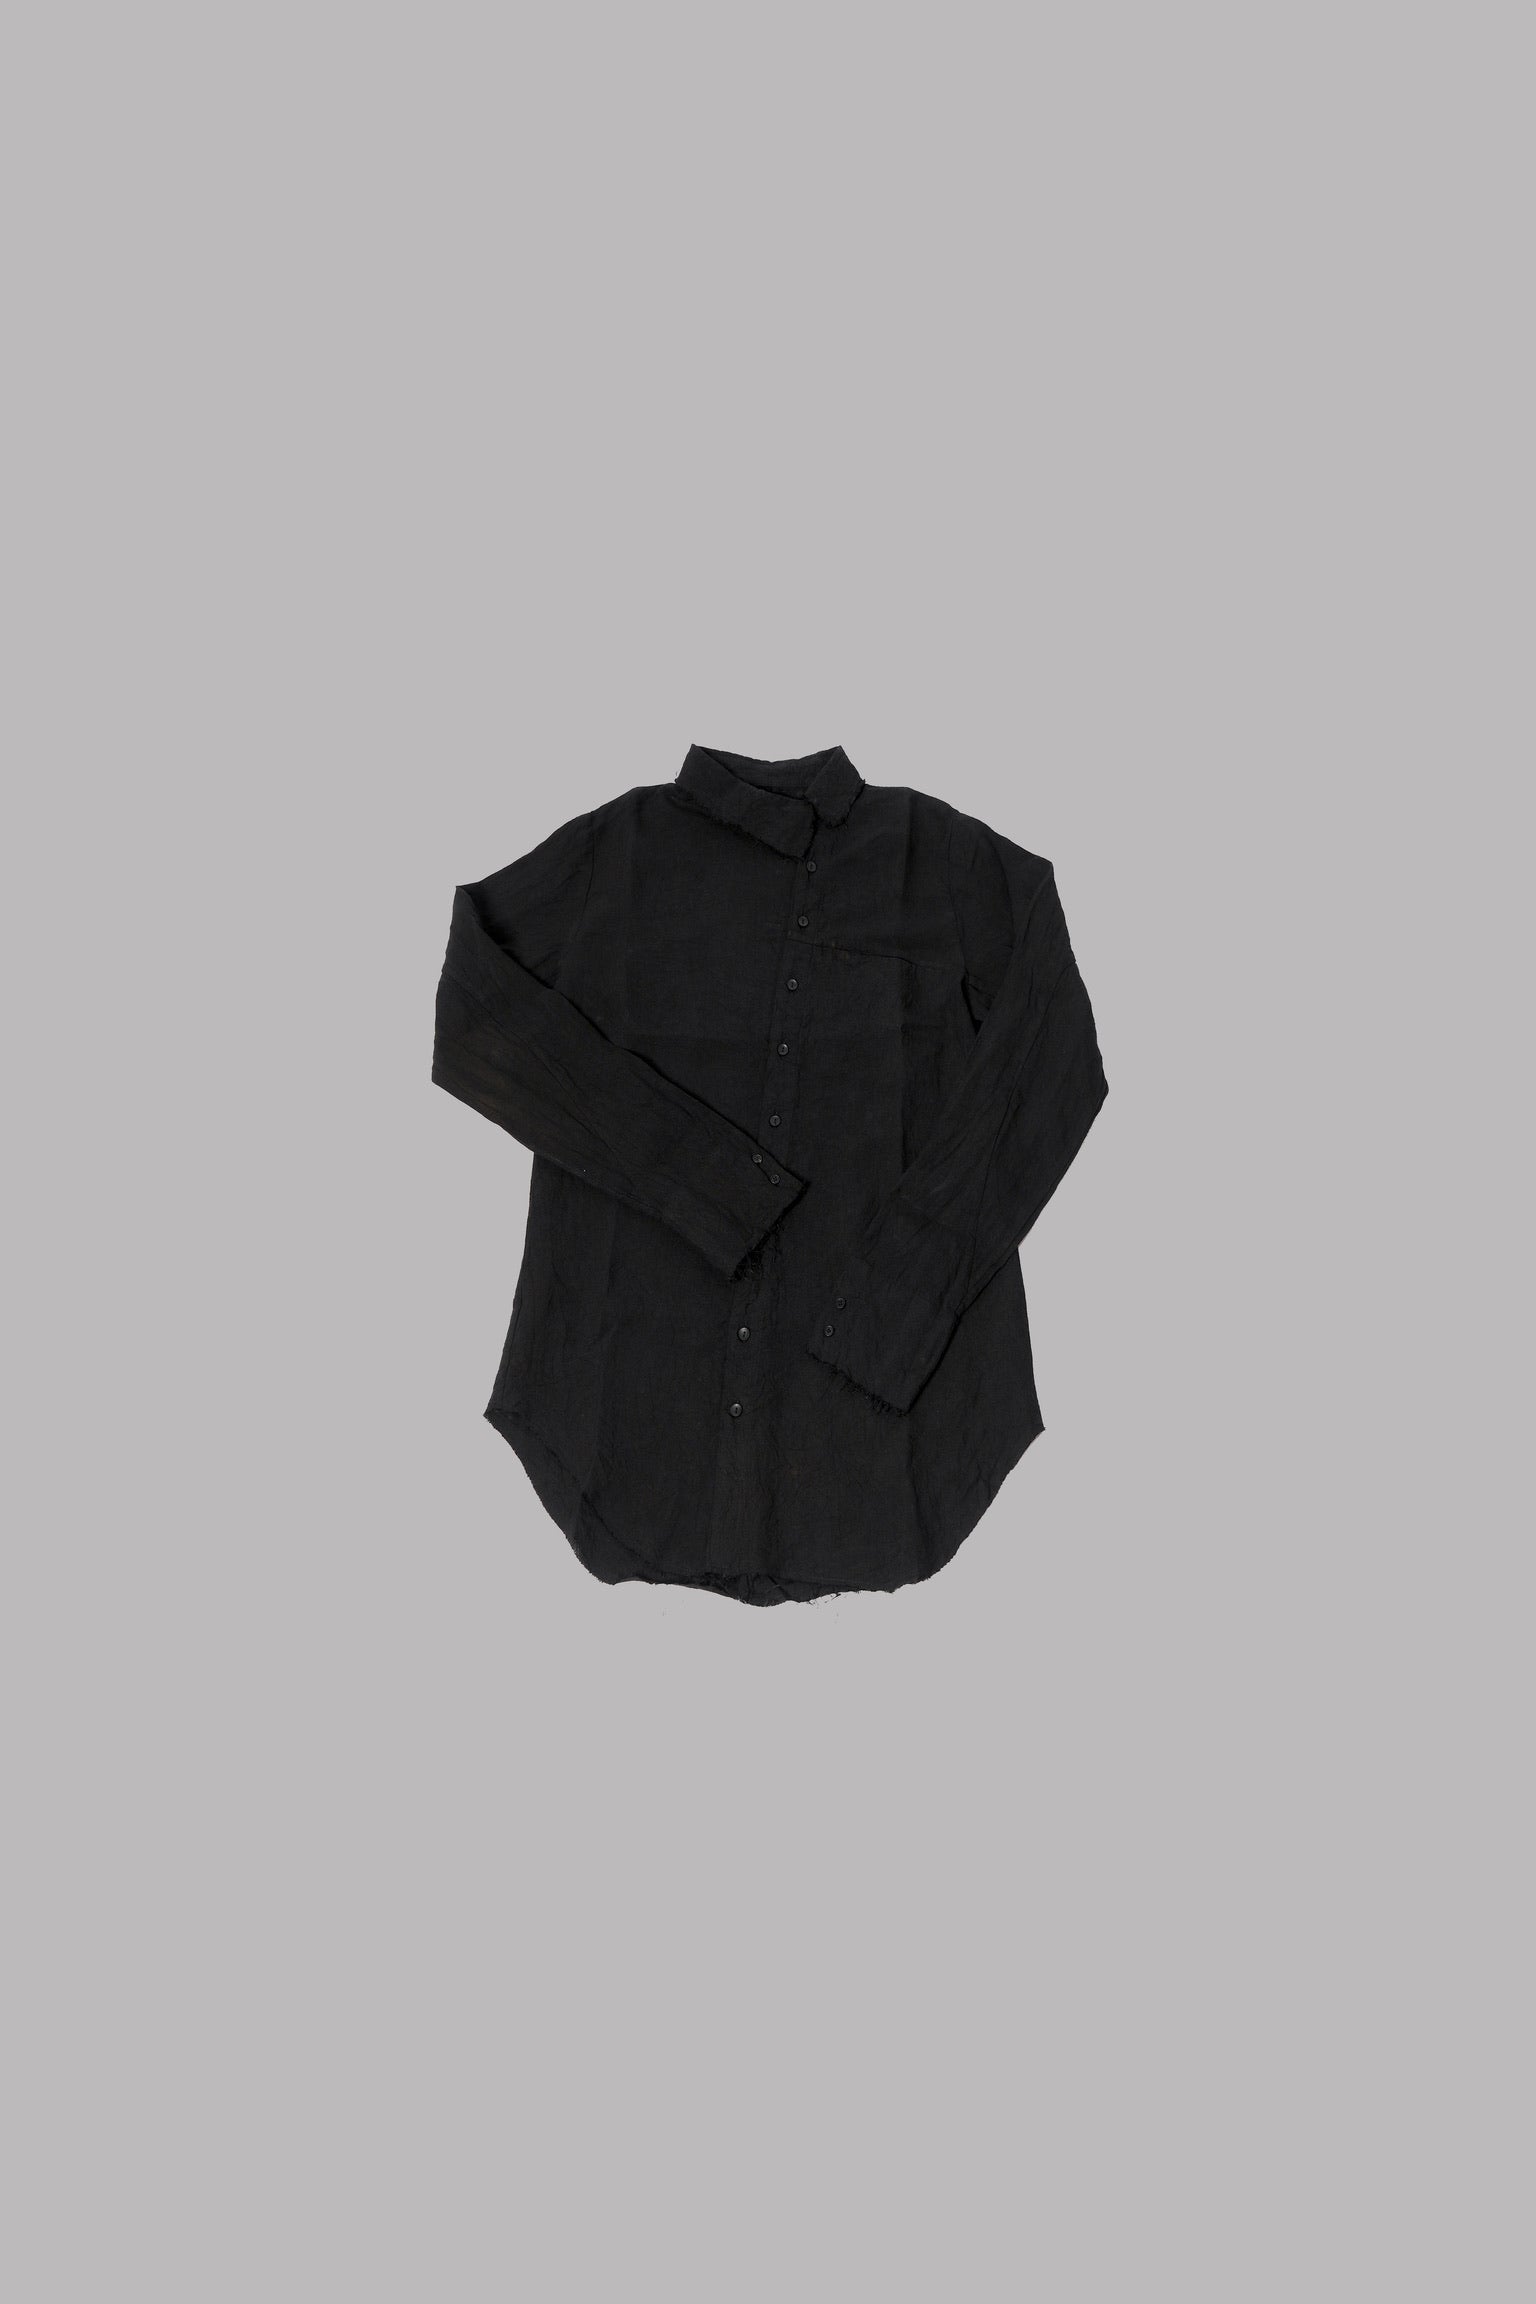 011- The Hole Shirt (Black)